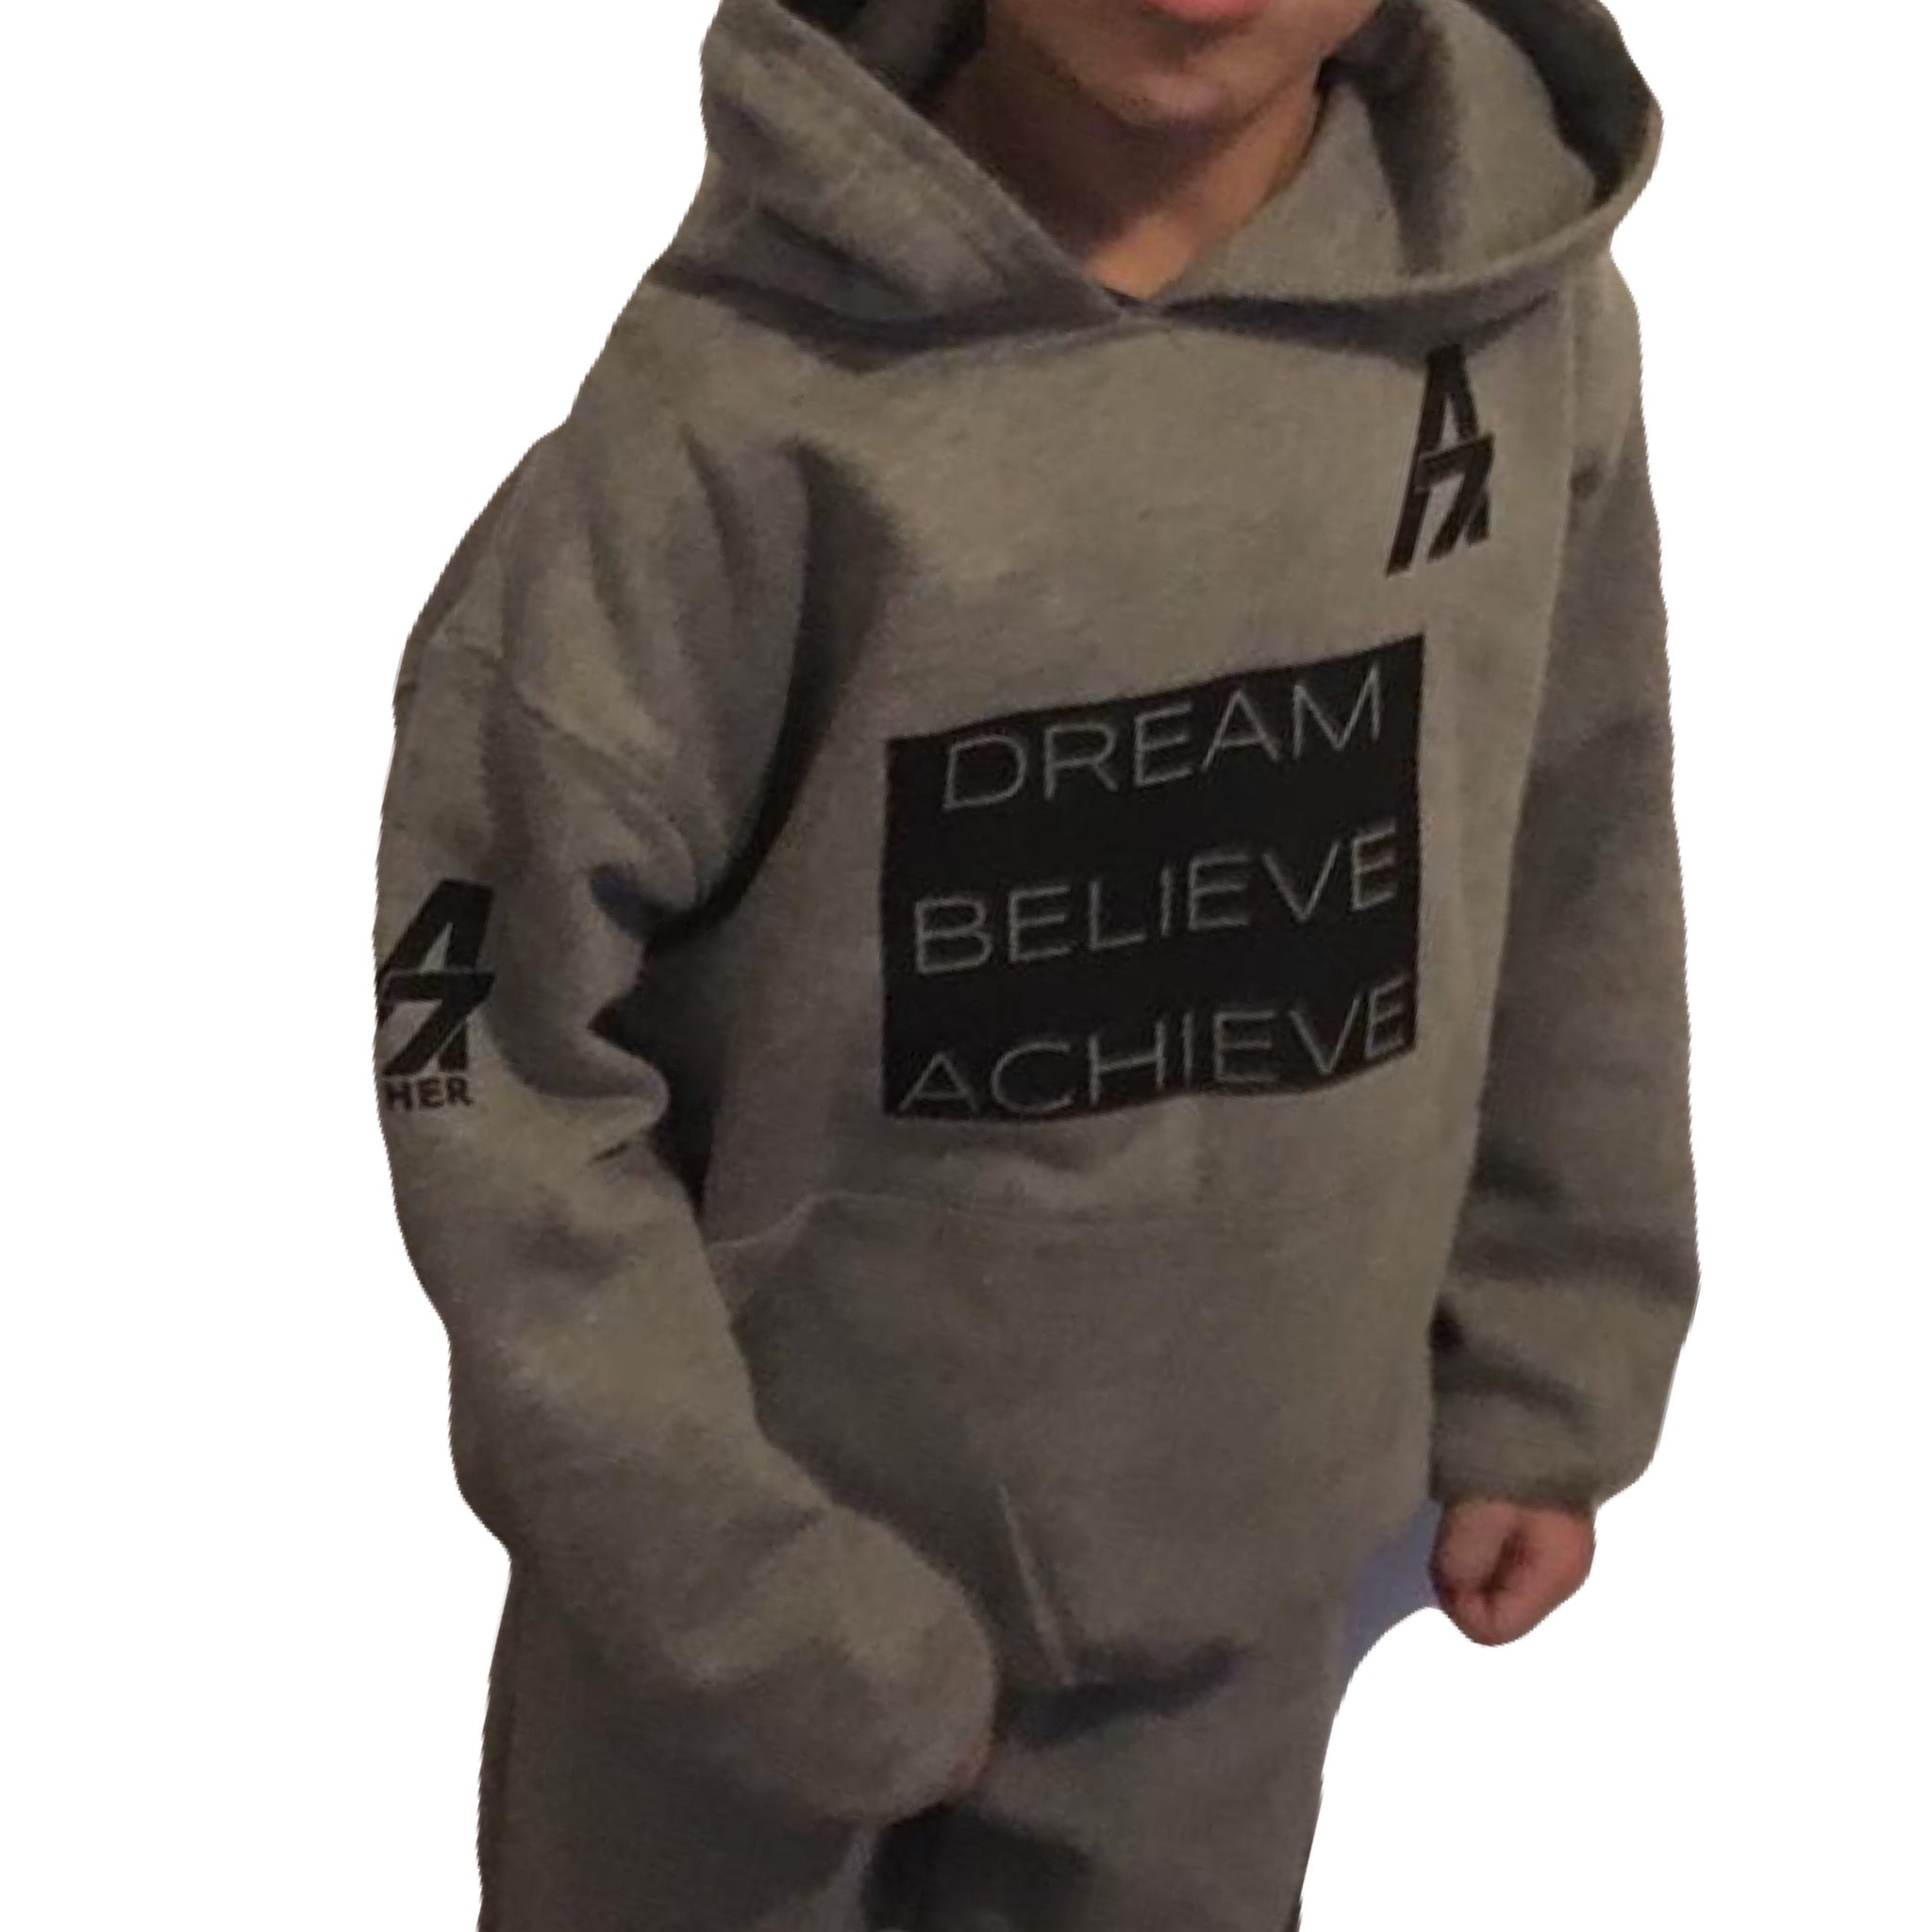 A7 Asher Children’s “Dream | Believe | Achieve” Jogger Set